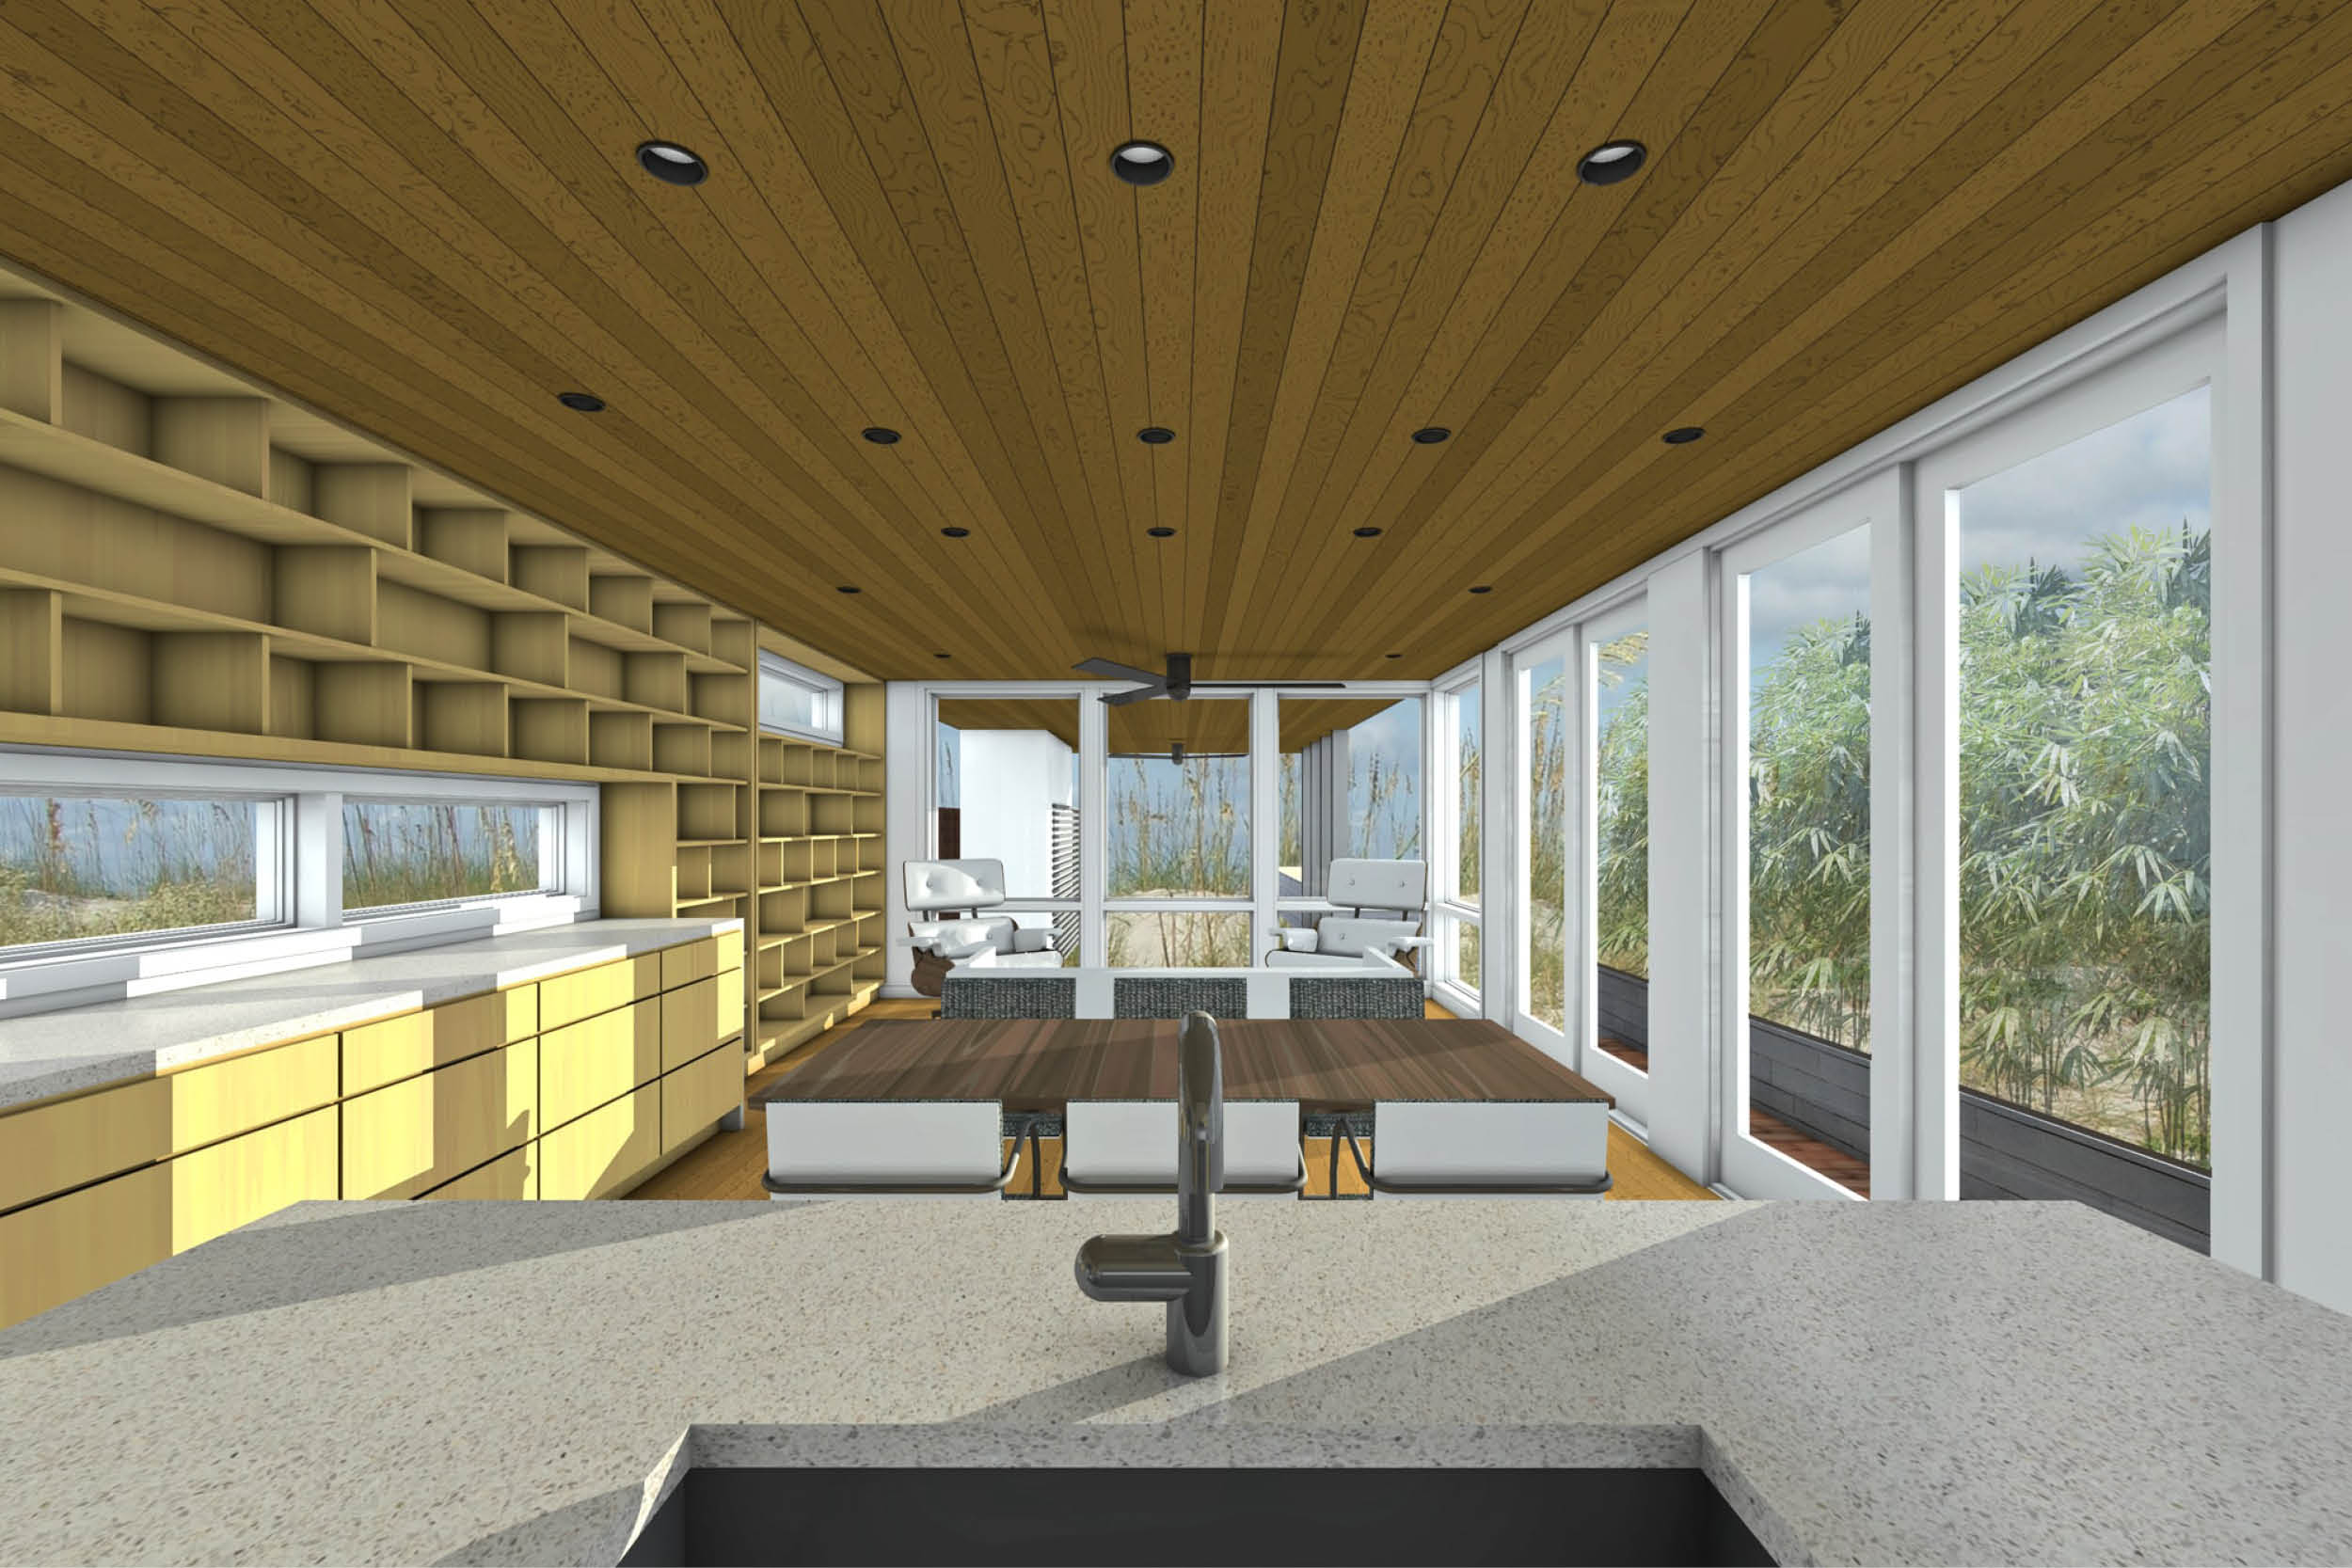 Modern Modular Prefab House | Long Beach Long Island New York | Kitchen Island Living Room Cedar Ceiling Built In Millwork Shelving Sliding Doors | RES4